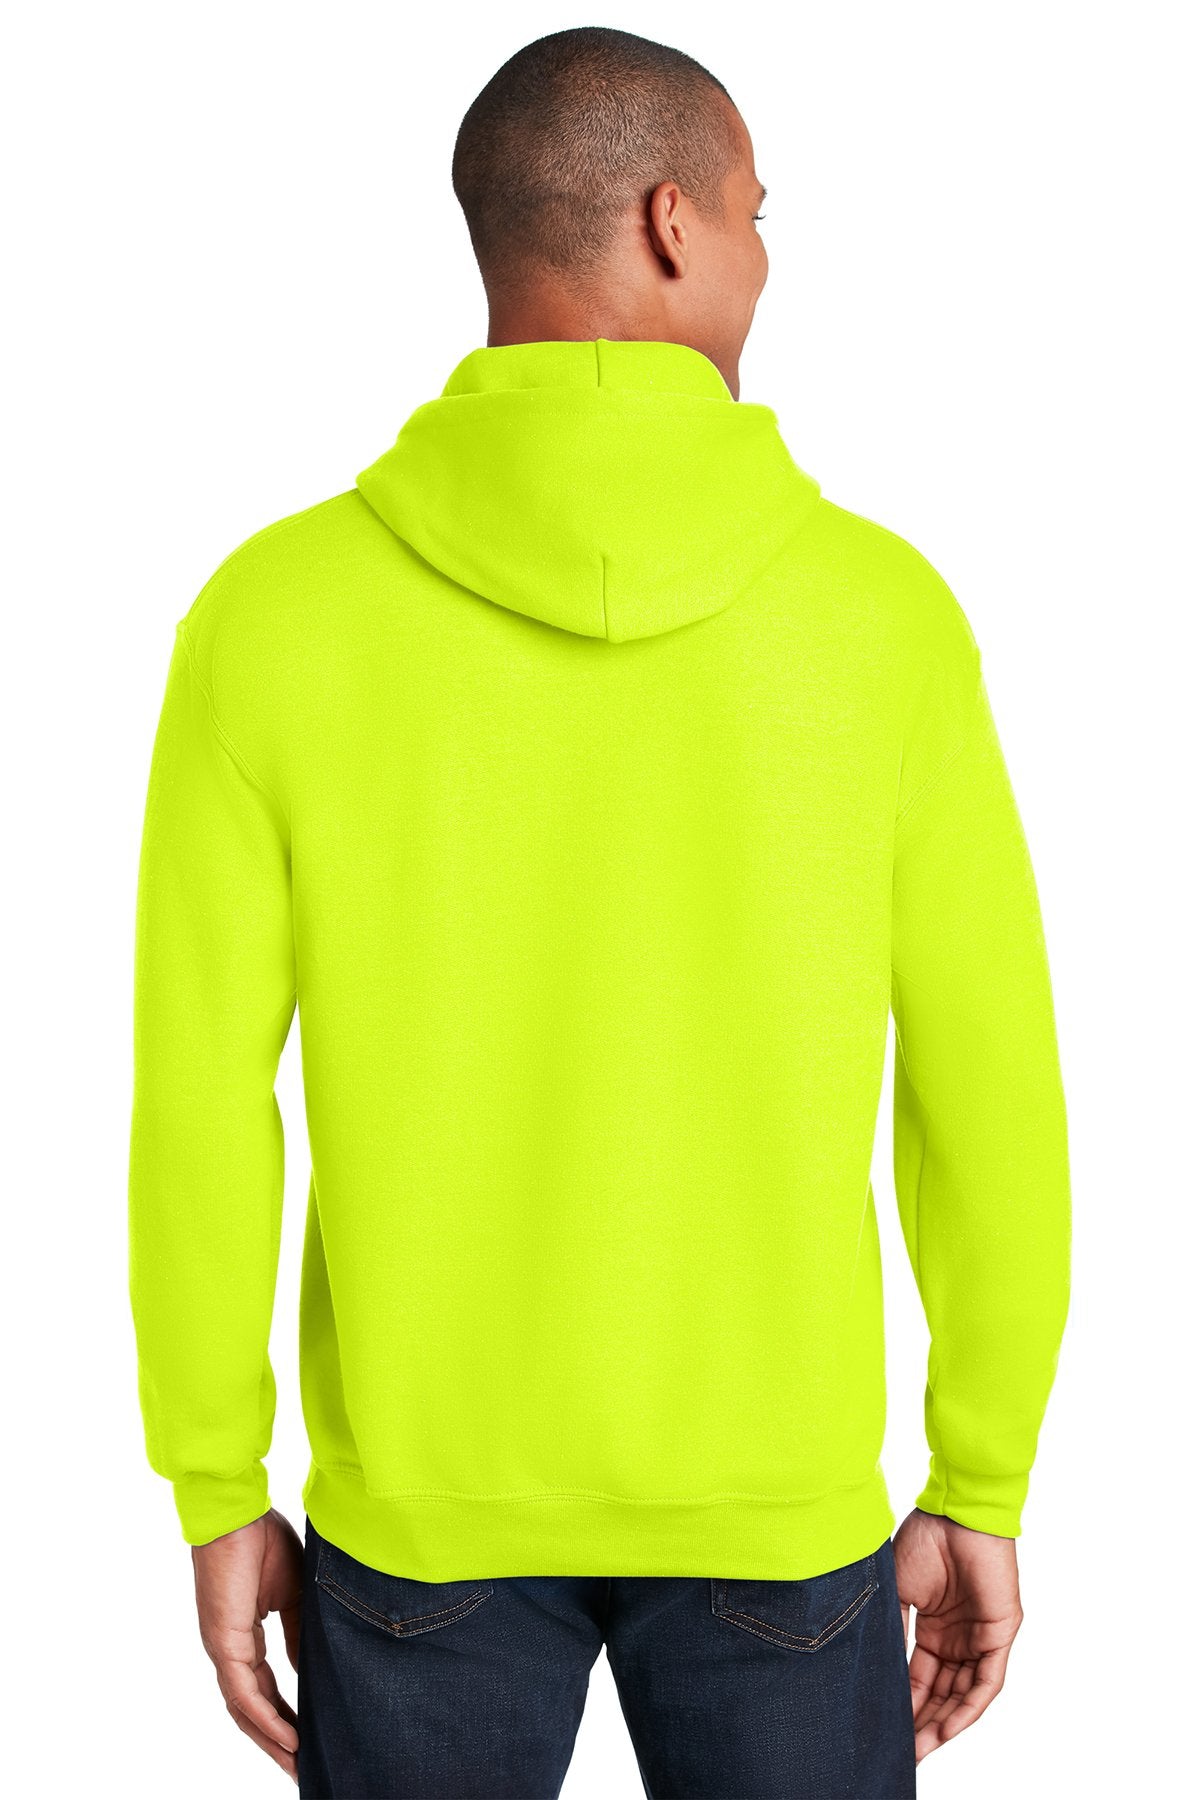 Gildan Heavy Blend Hooded Sweatshirt Safety Green